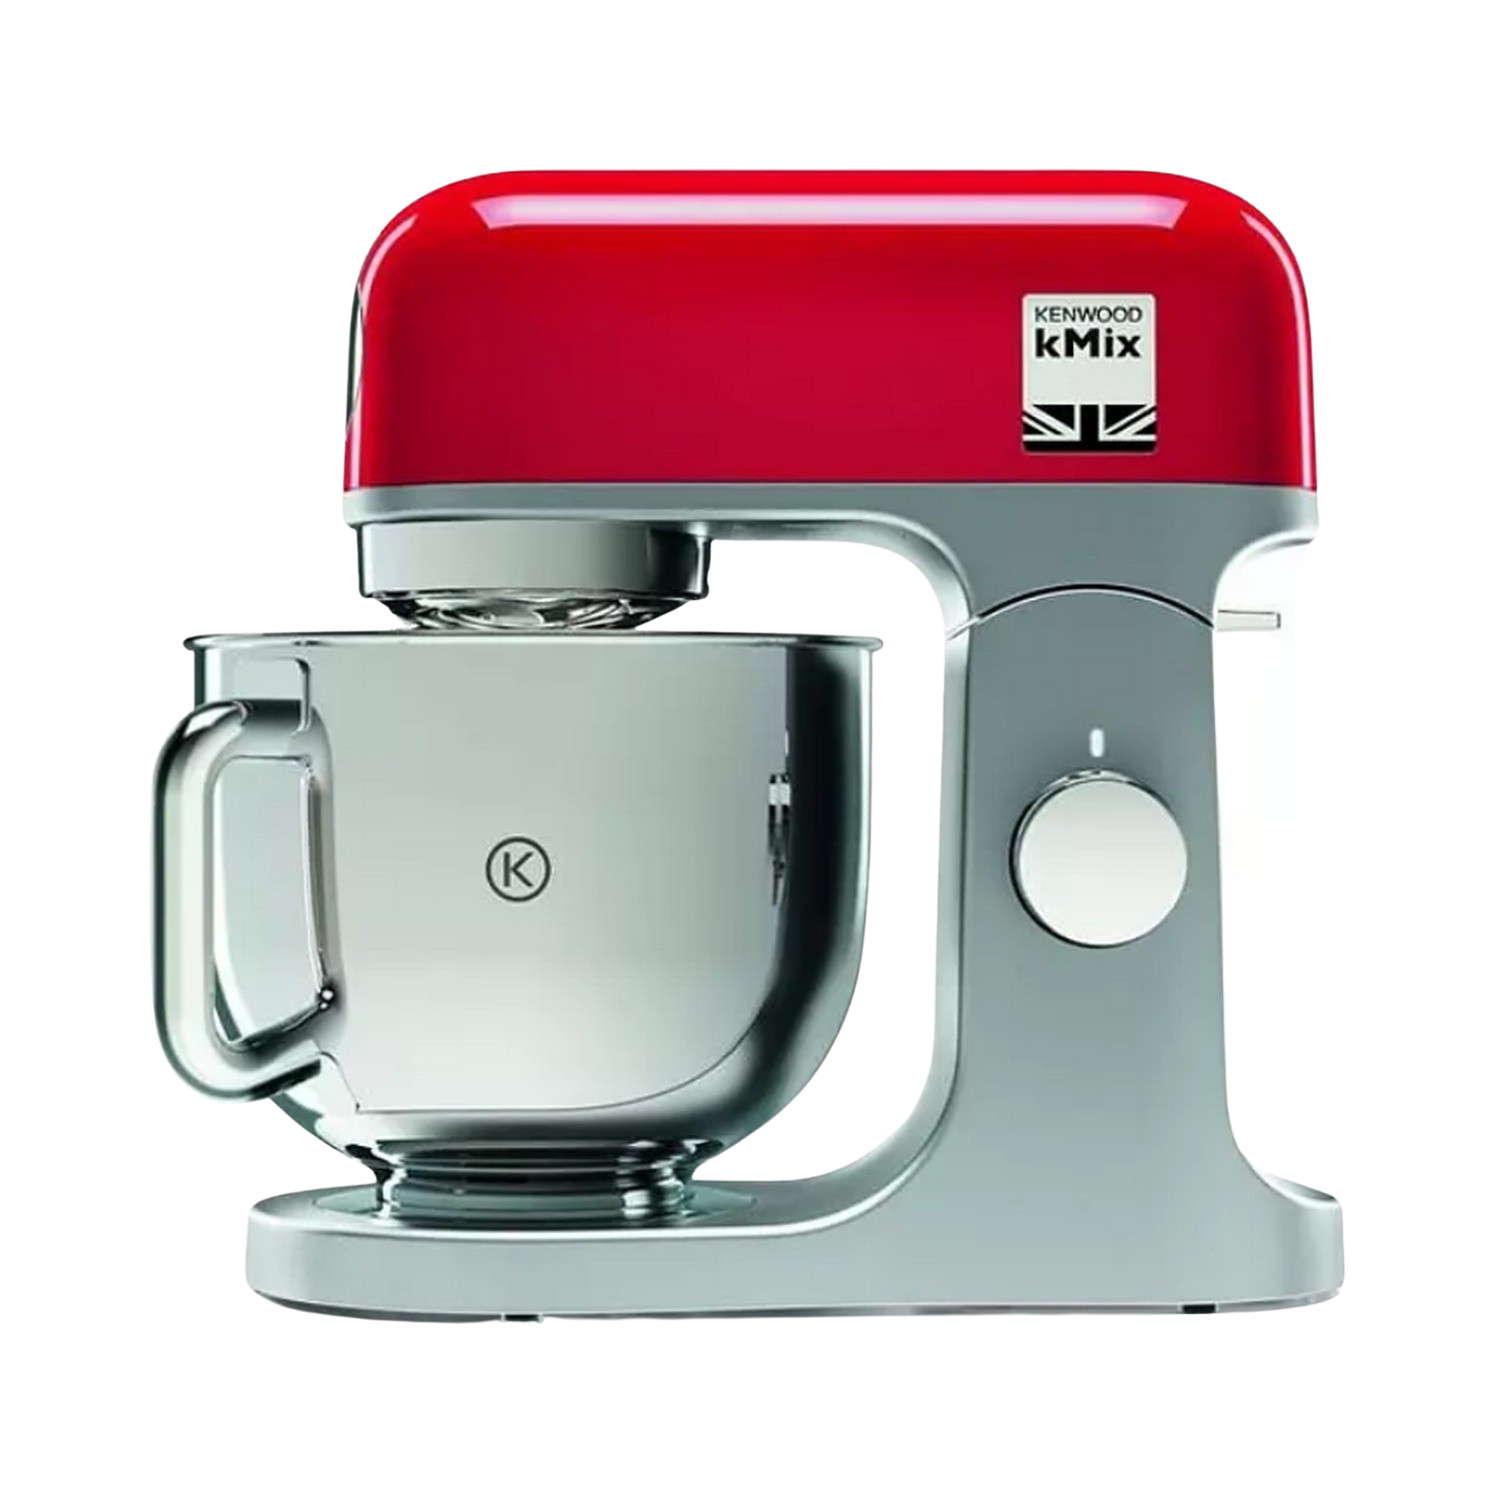 Kenwood Kmix Kmx750ard robot de cocina multifunción 1000 w bol 5 con asa gancho para amasar varillas mezclado acero inoxidable 6 velocidades color rojo kmx750rd 1000w potencia 5l 3 kmx750rrd